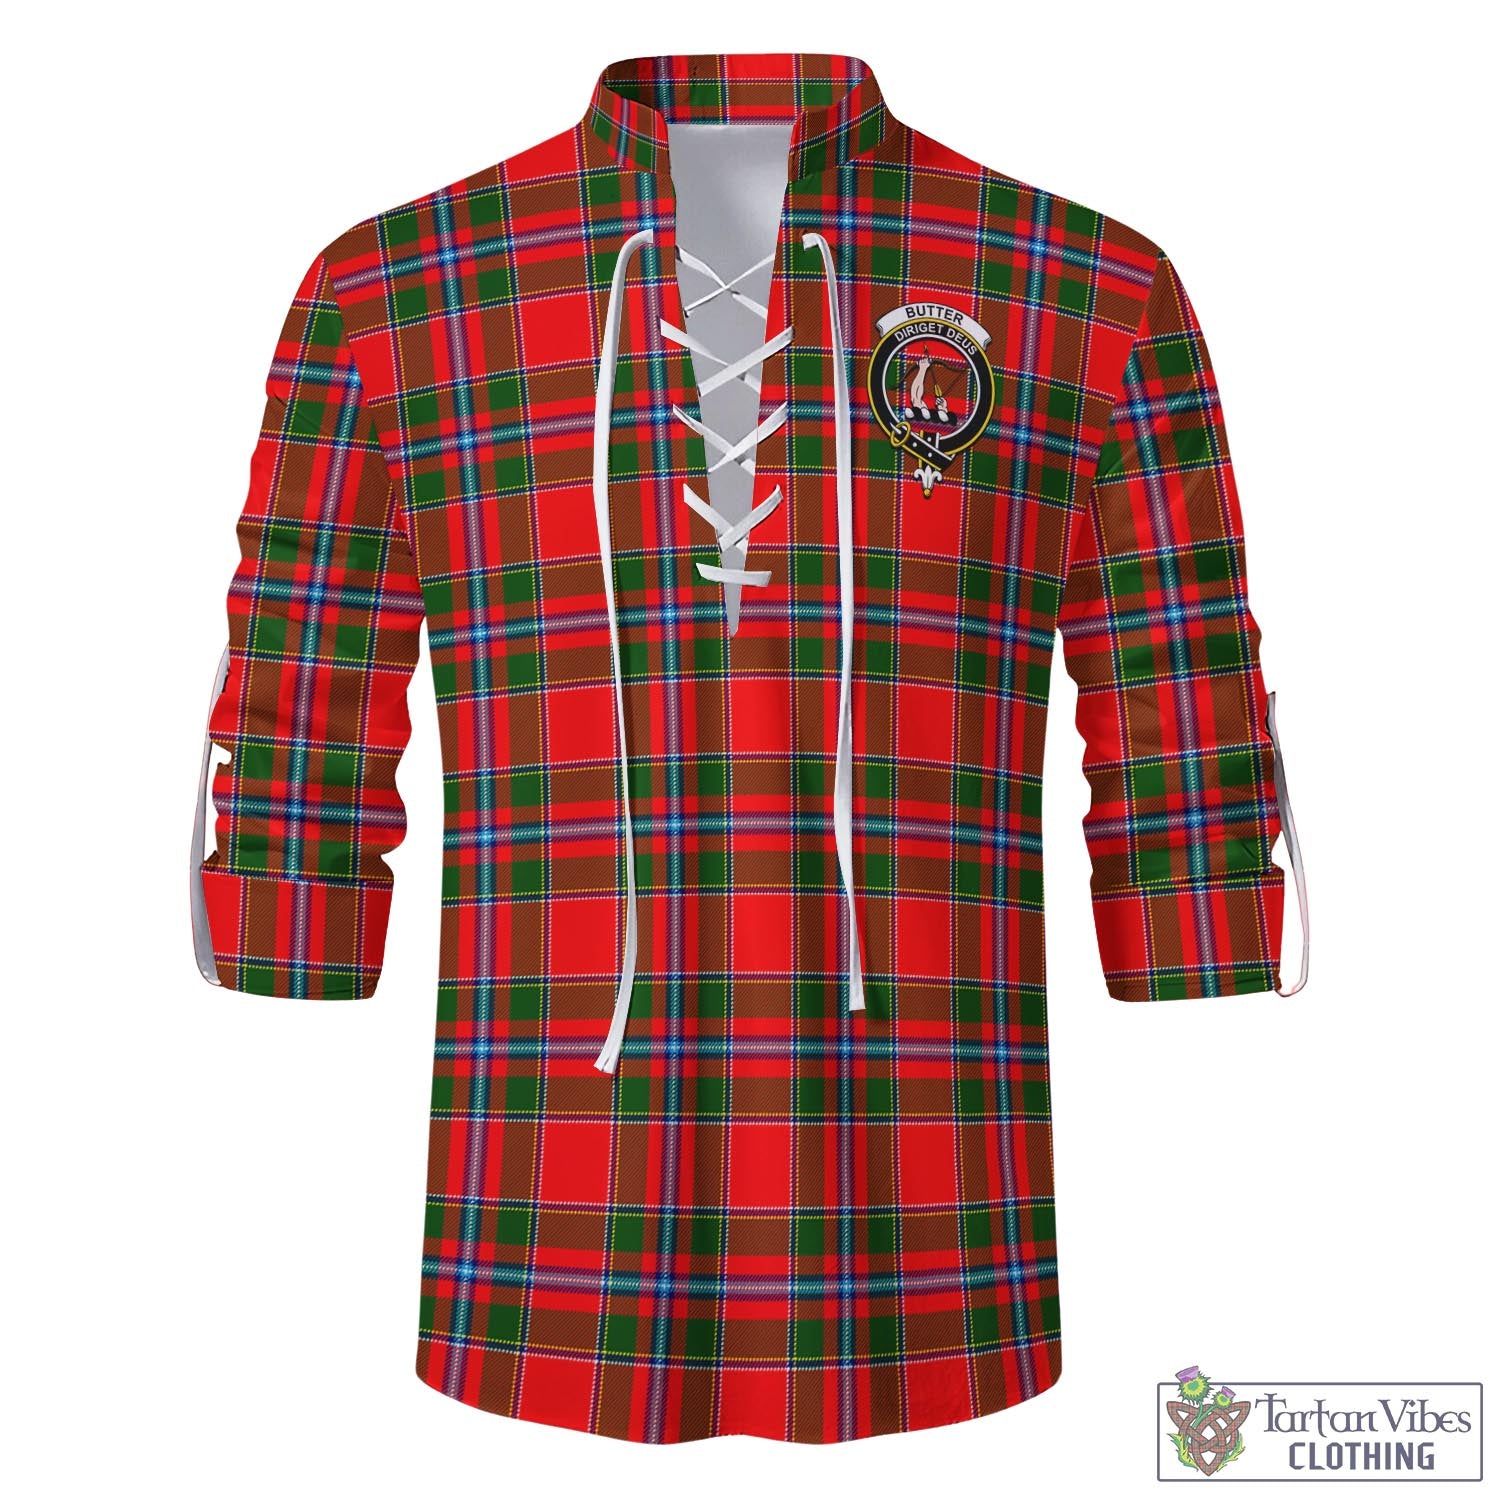 Tartan Vibes Clothing Butter Tartan Men's Scottish Traditional Jacobite Ghillie Kilt Shirt with Family Crest